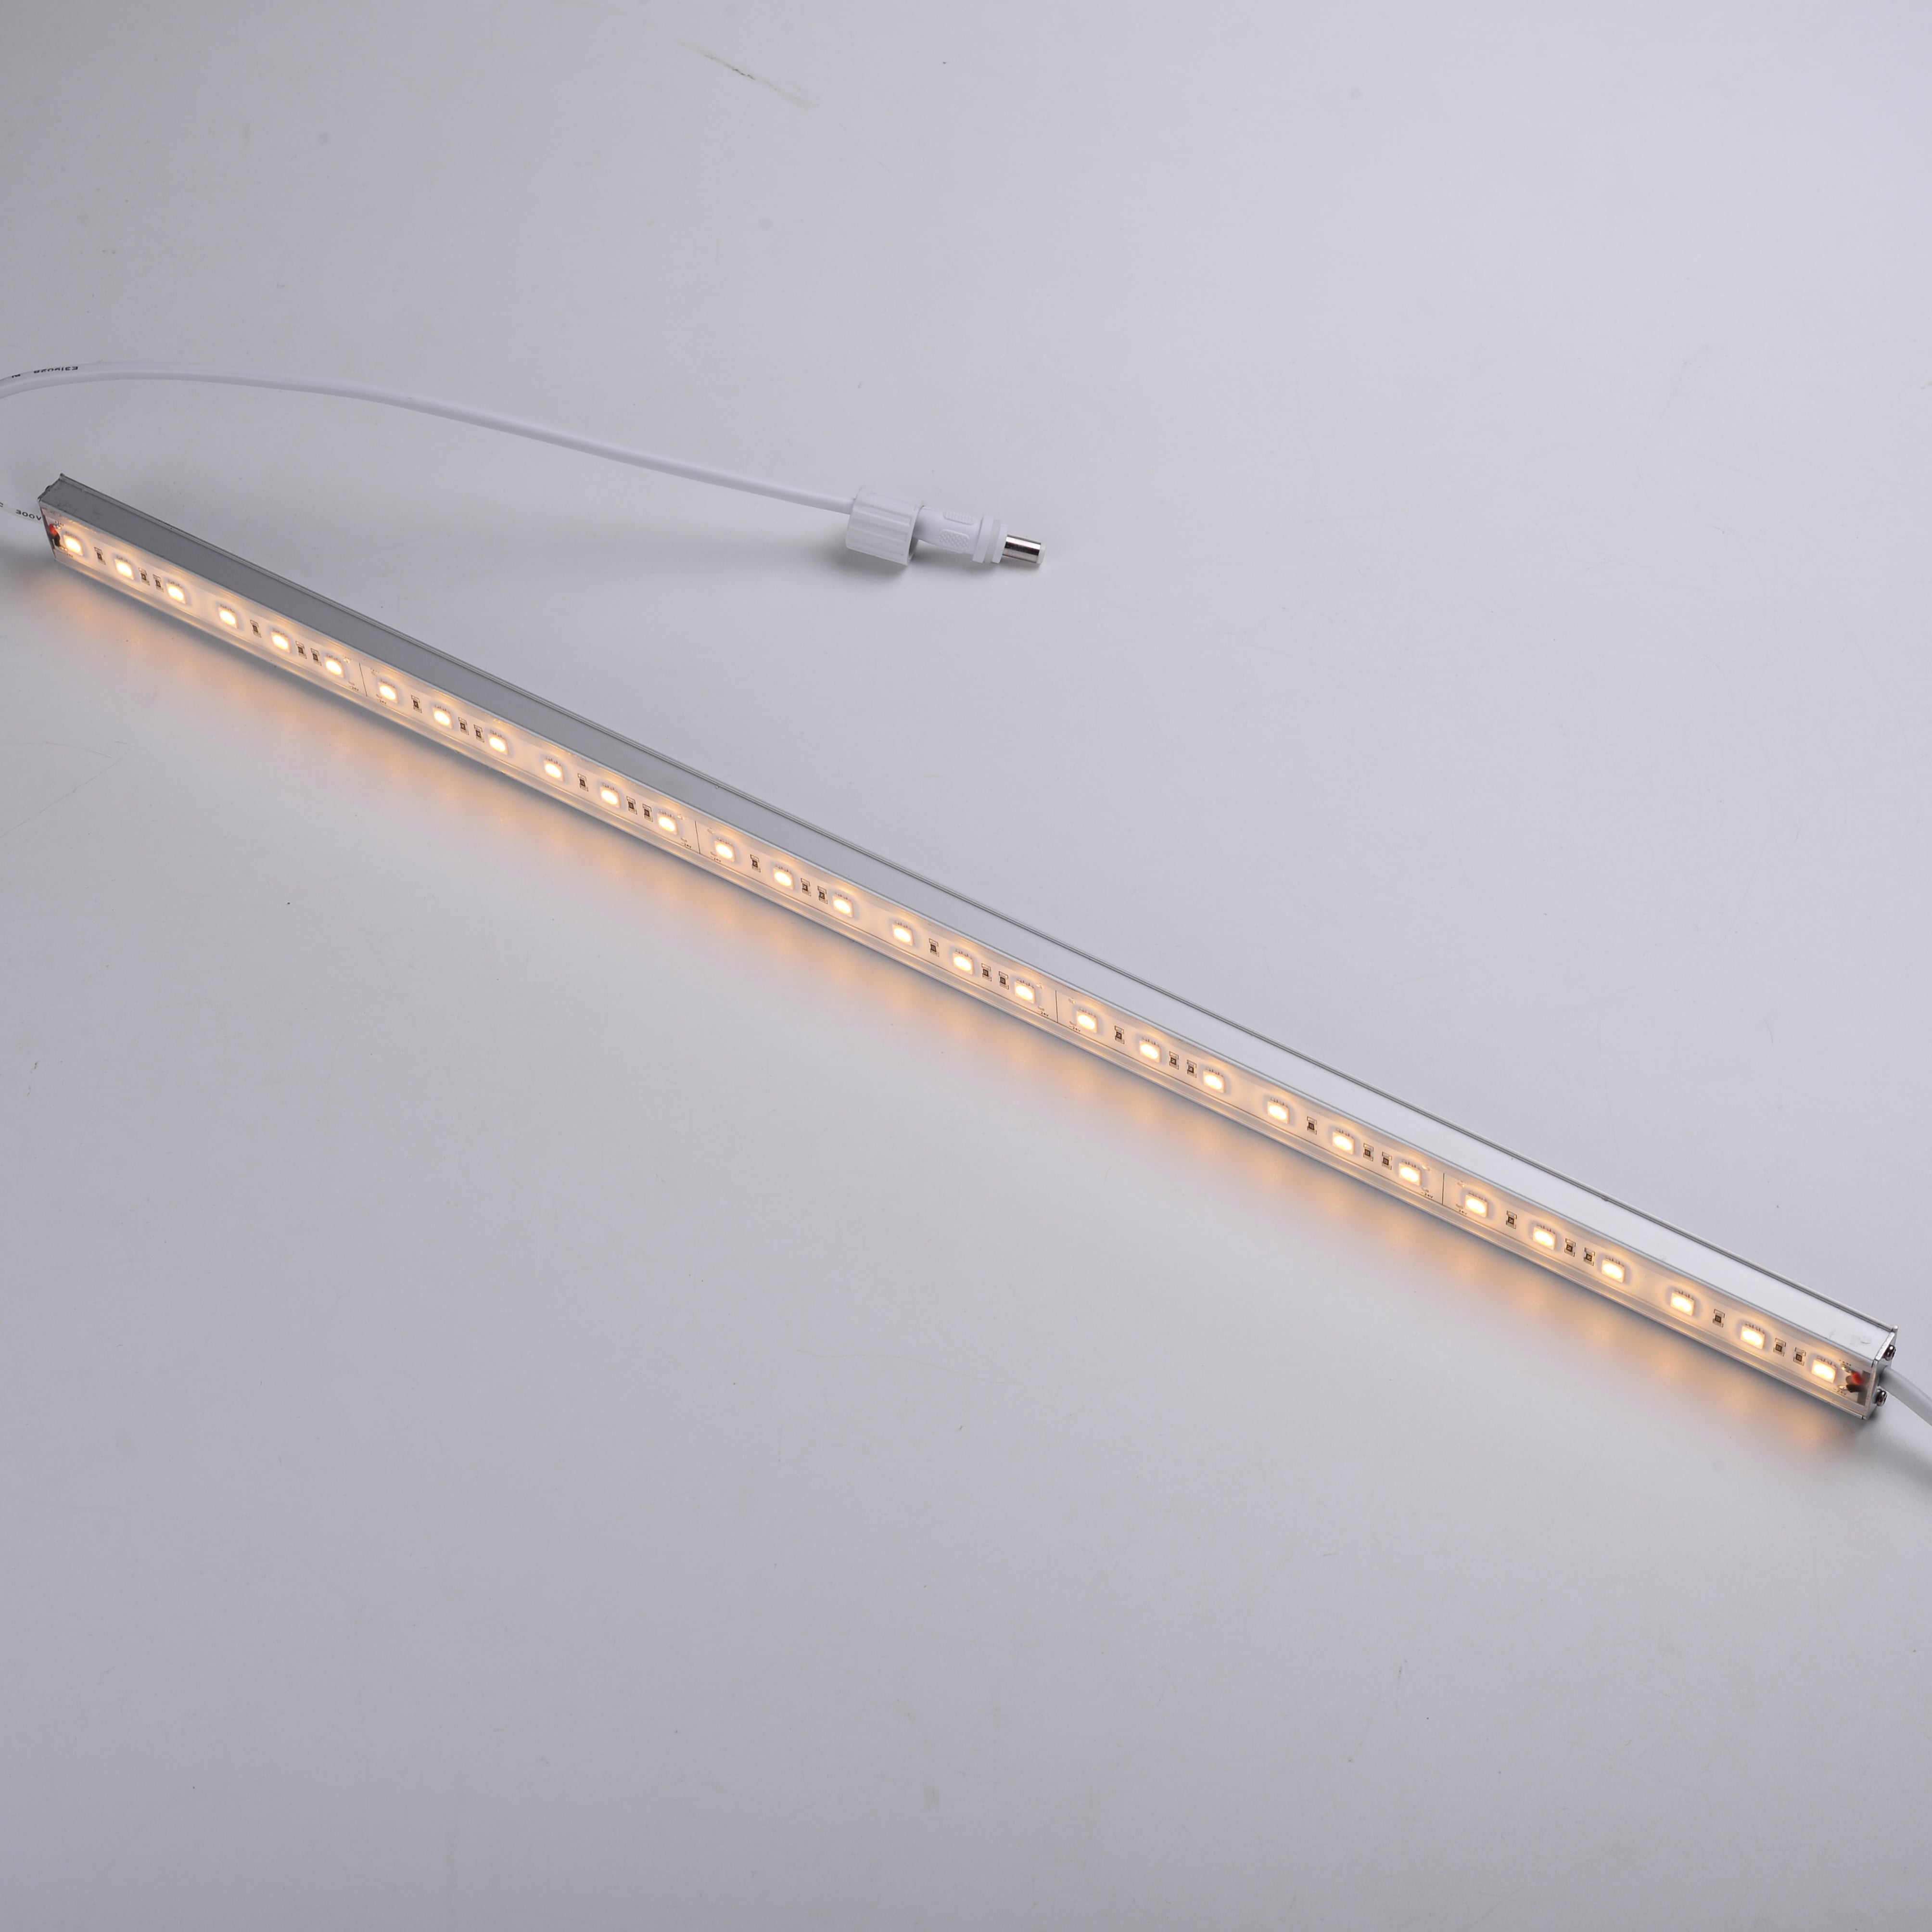 Waterproof Linear LED Light Bar Fixture - 195 lm/ft - 1ft / 2ft